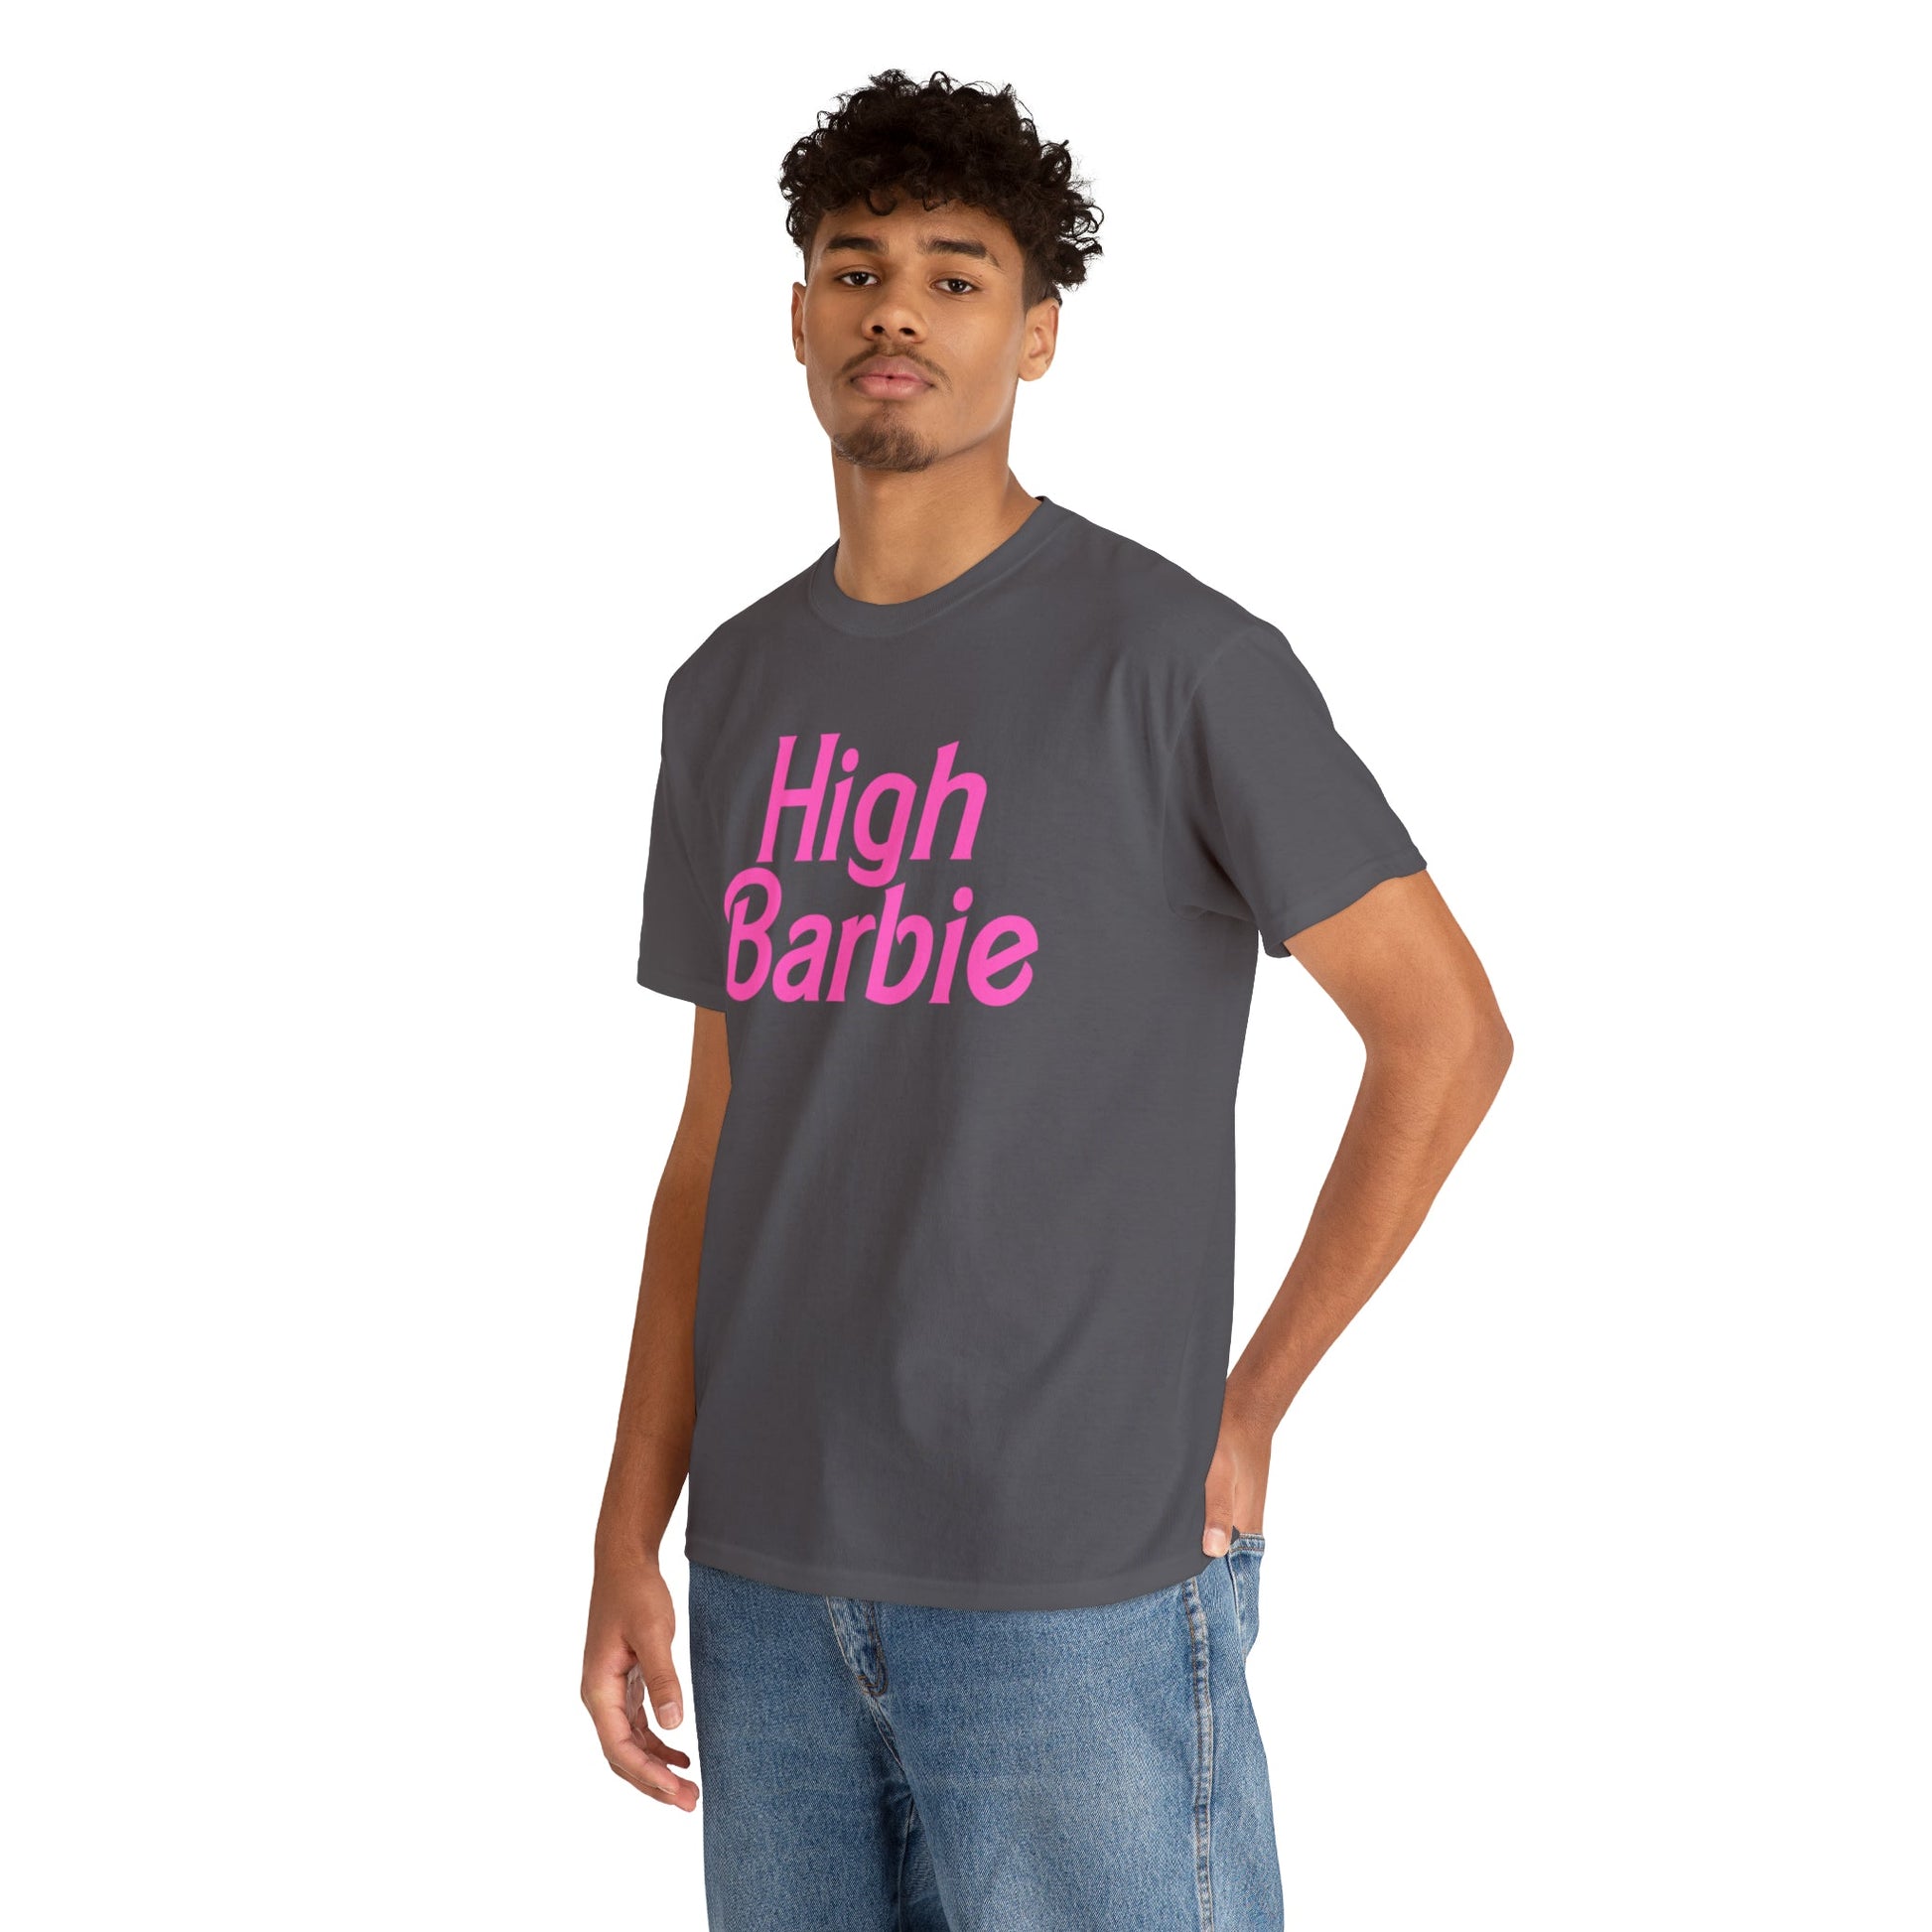 HIGH BARBIE - Funny Vintage Style Stoner Gift Unisex T-Shirt - Asylum Books